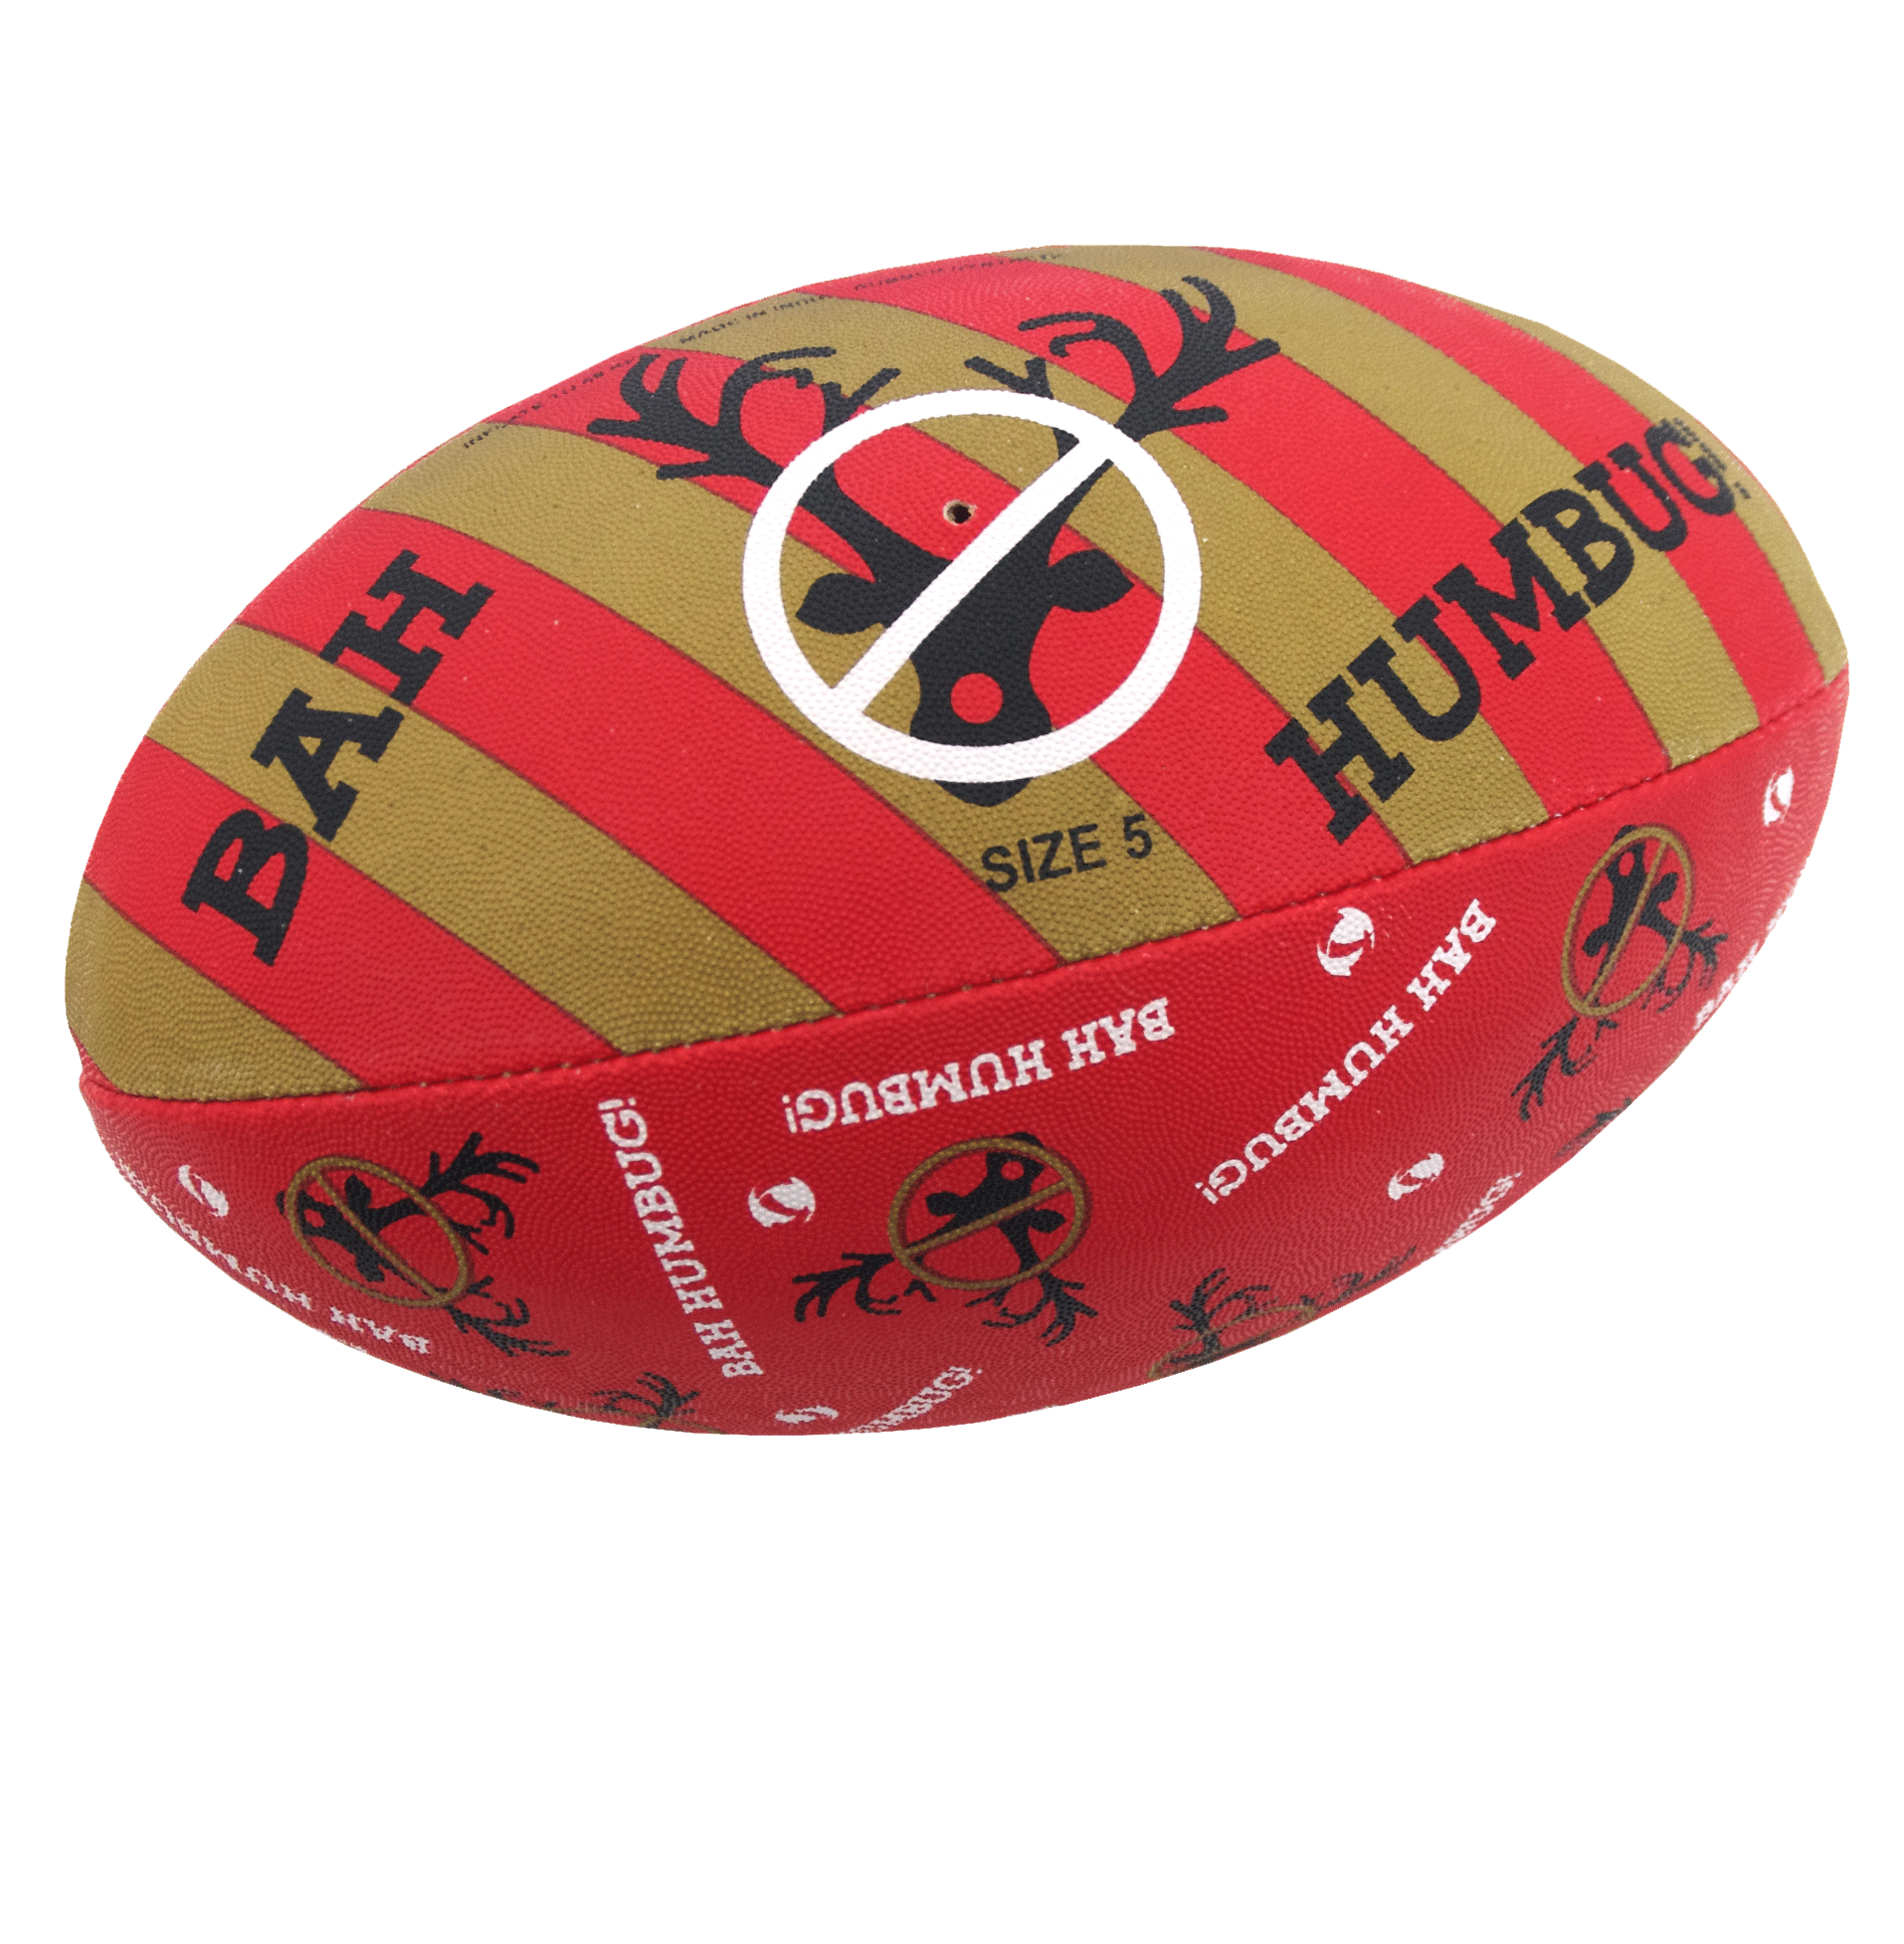 Immagine di sfondo PNG palla da rugby